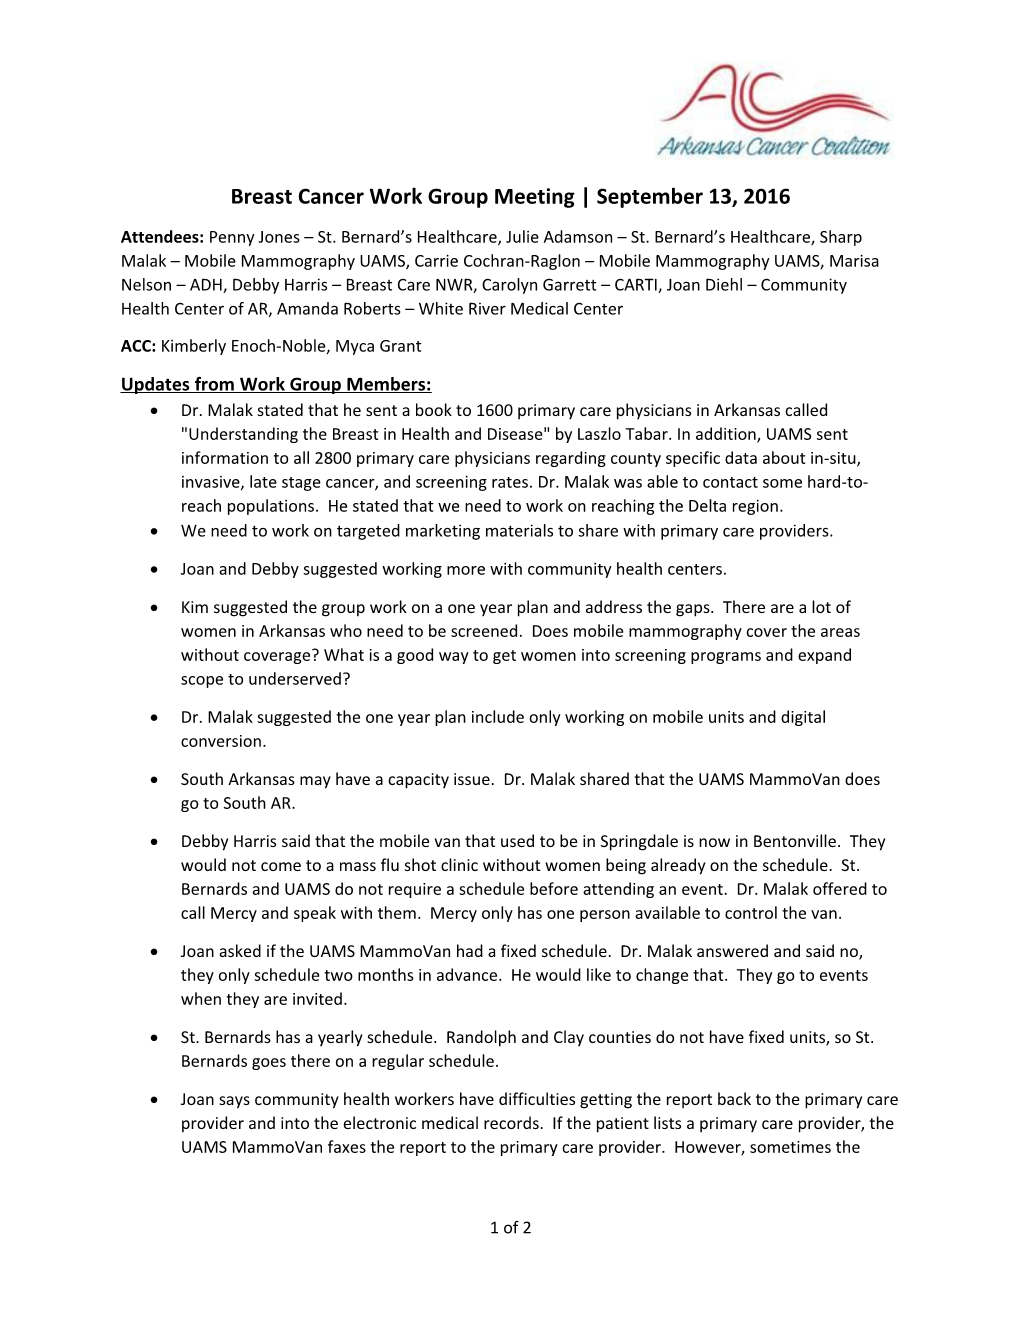 Breast Cancer Work Group Meeting September 13, 2016